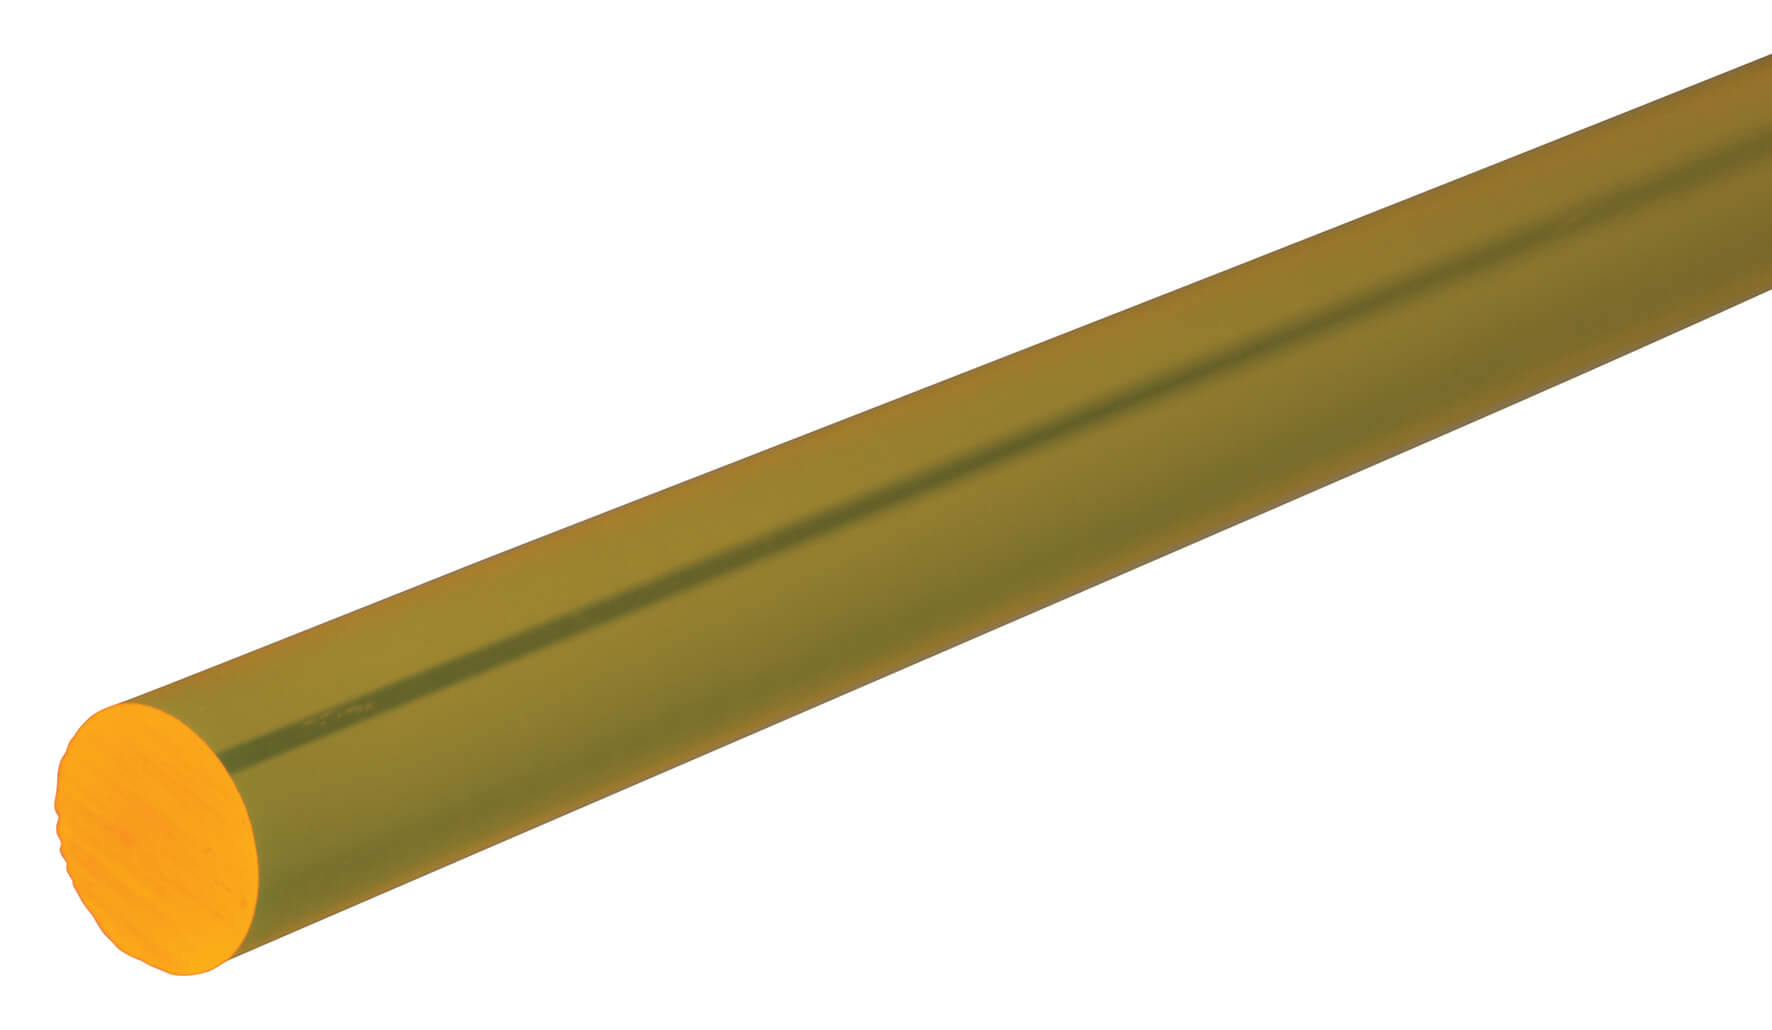 Fluorescent Acrylic Rod 4mm x 500mm - Yellow